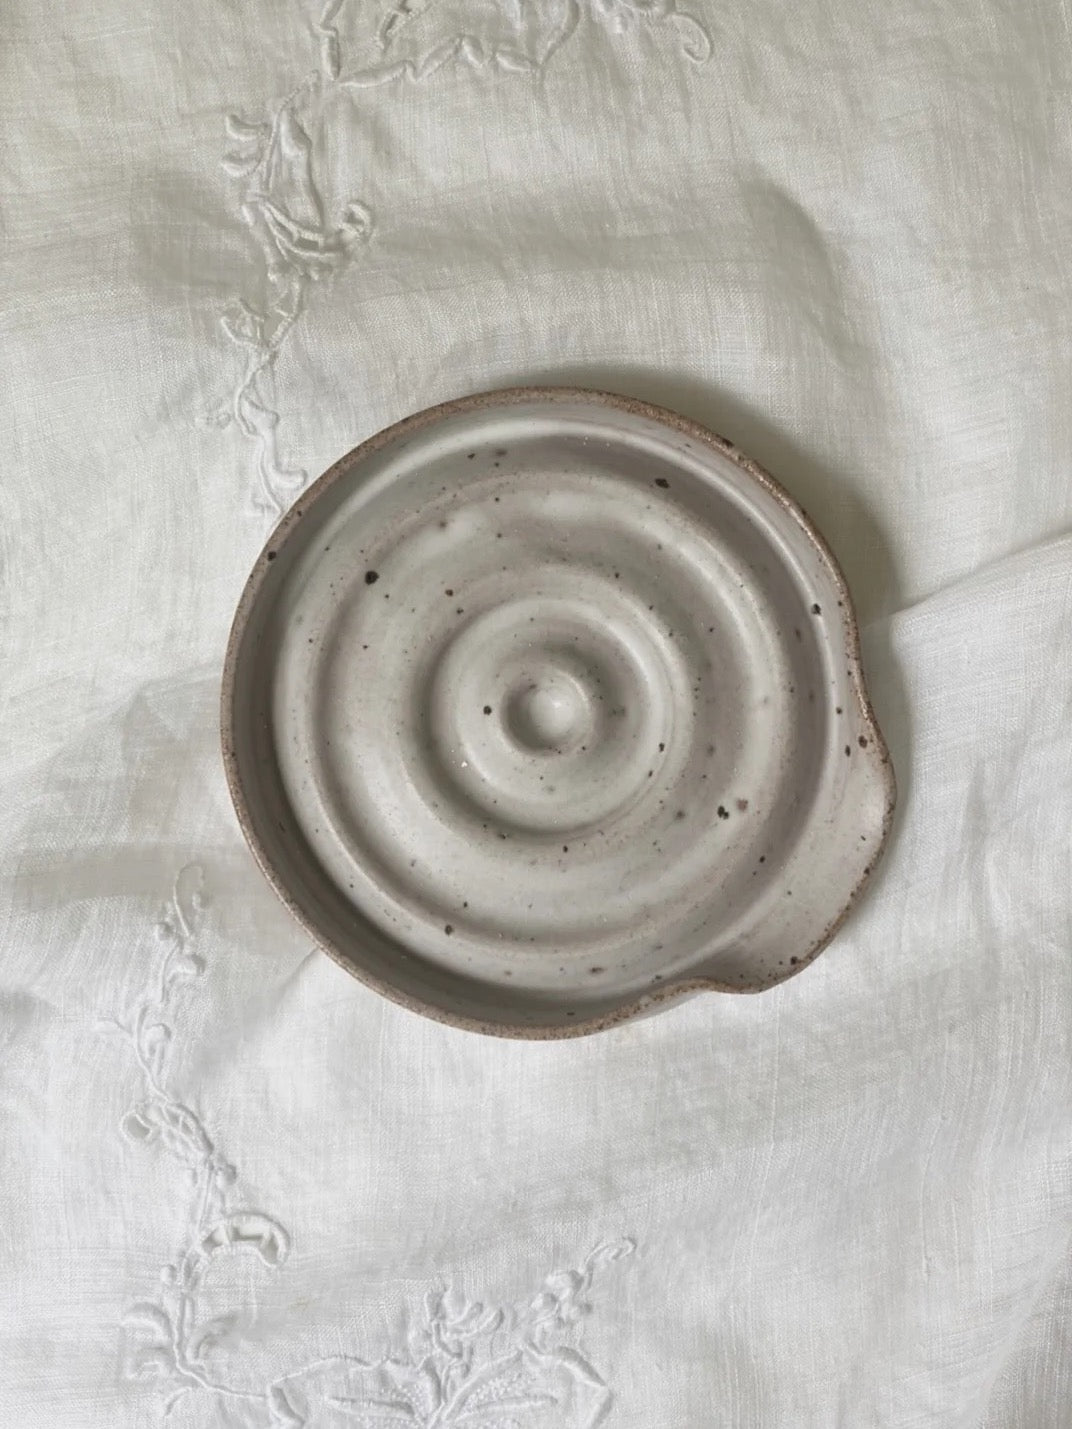 A handmade Spoon Rest - Cloud by deborah sweeney with a spiral pattern on it.